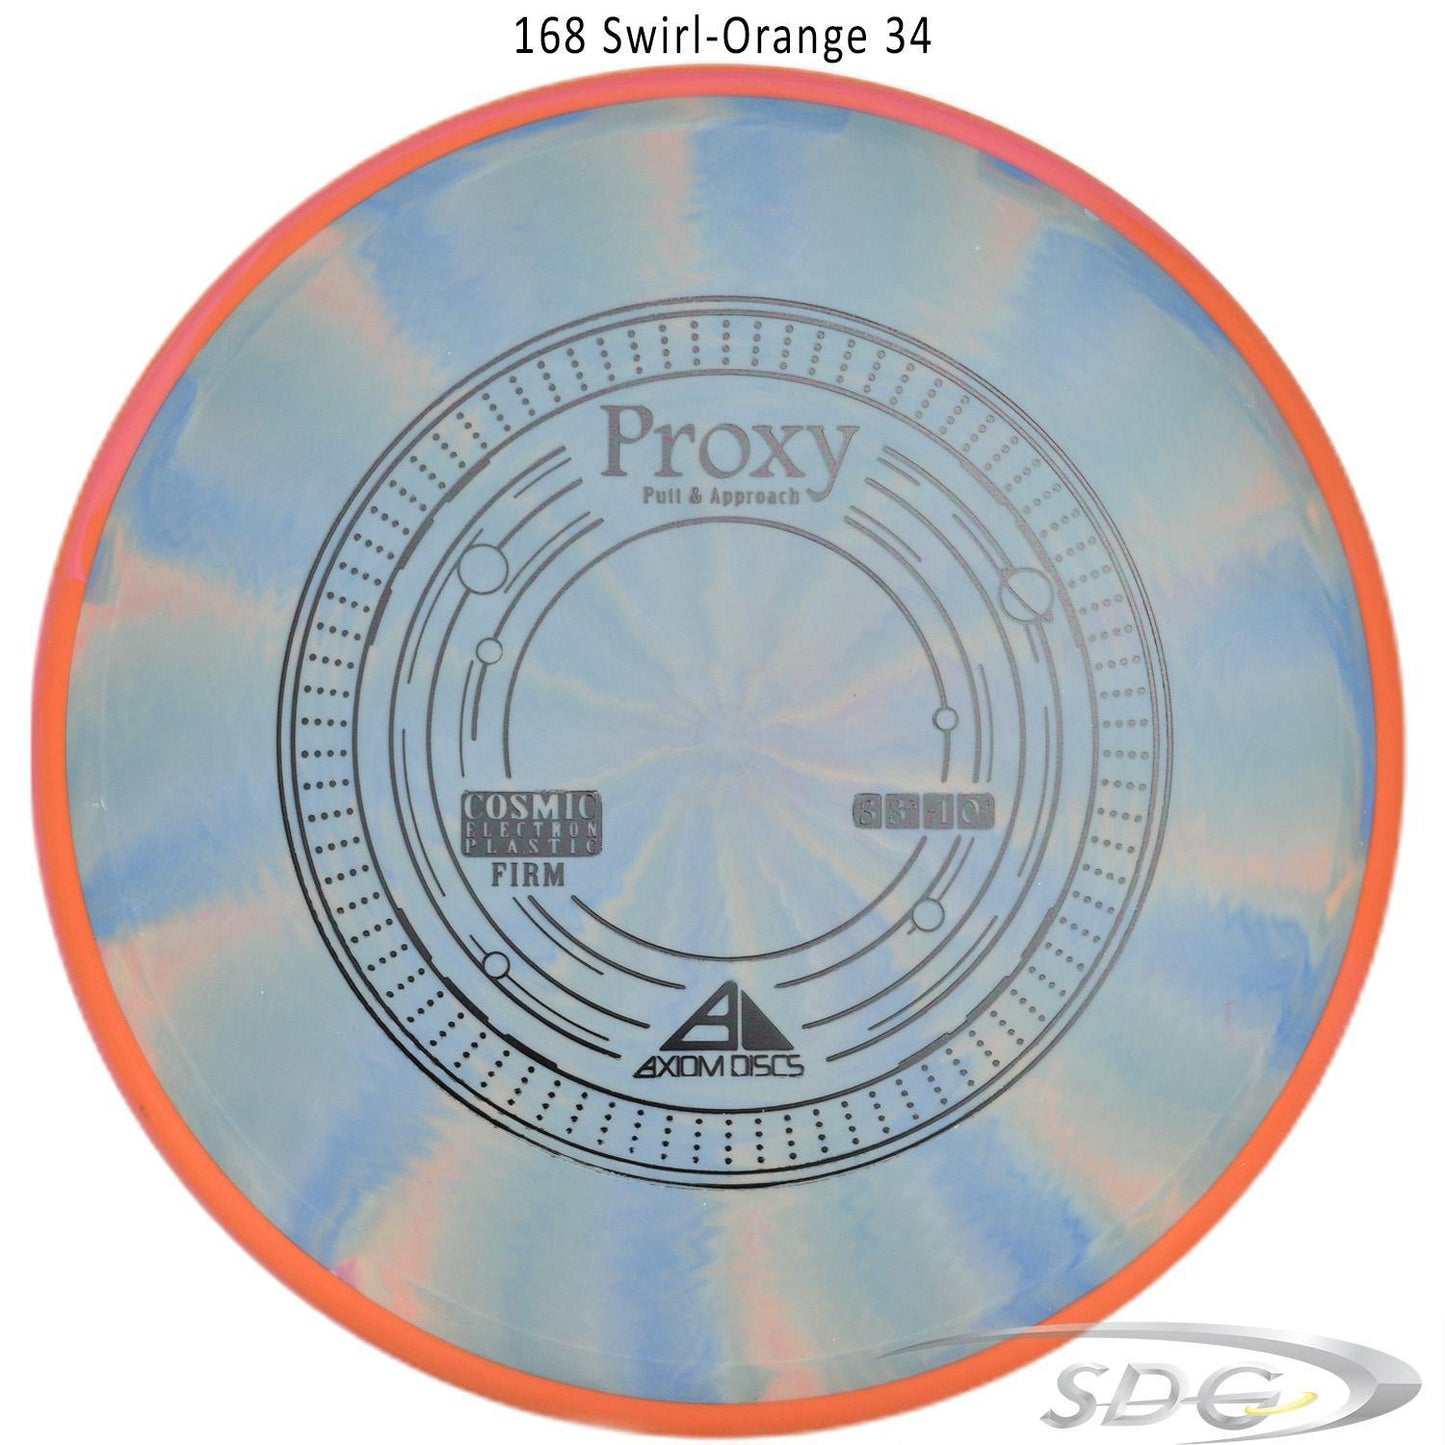 axiom-cosmic-electron-proxy-firm-disc-golf-putt-approach 168 Swirl-Orange 34 